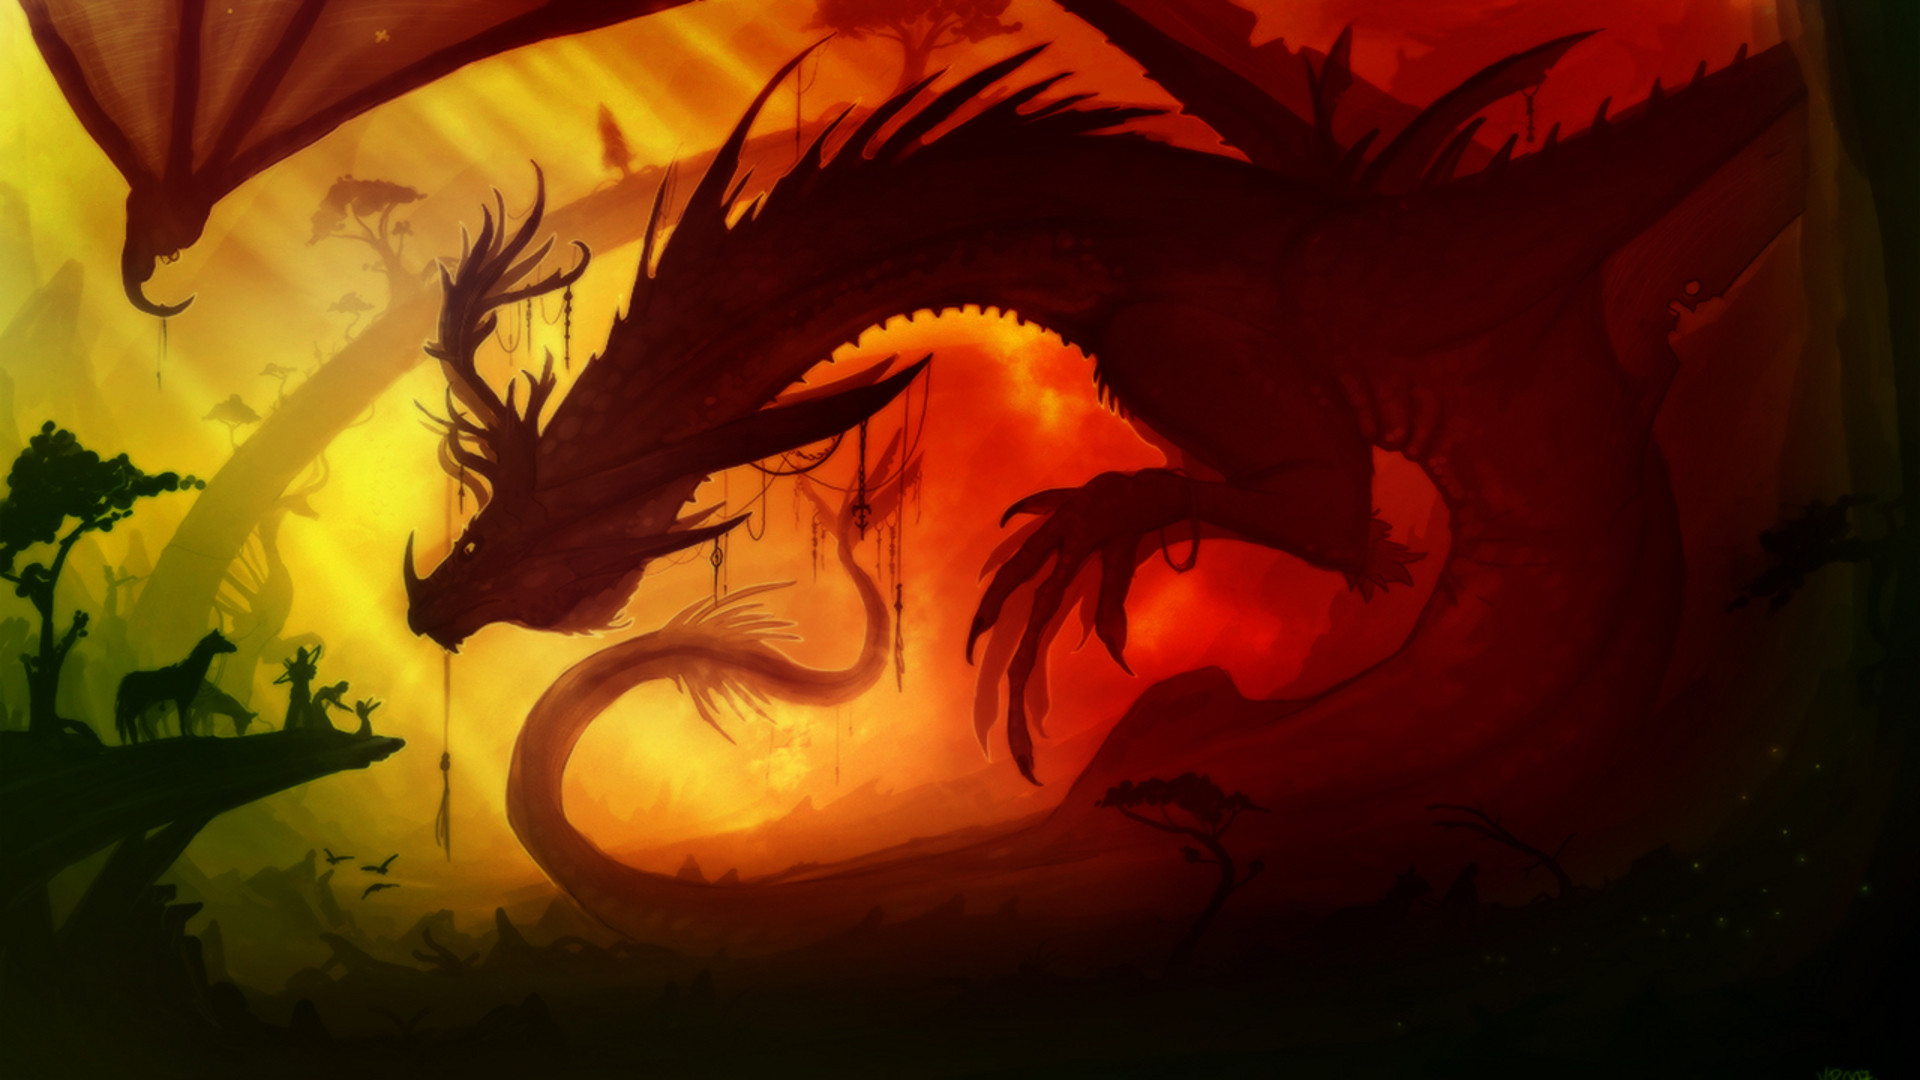 Fantasy dragons